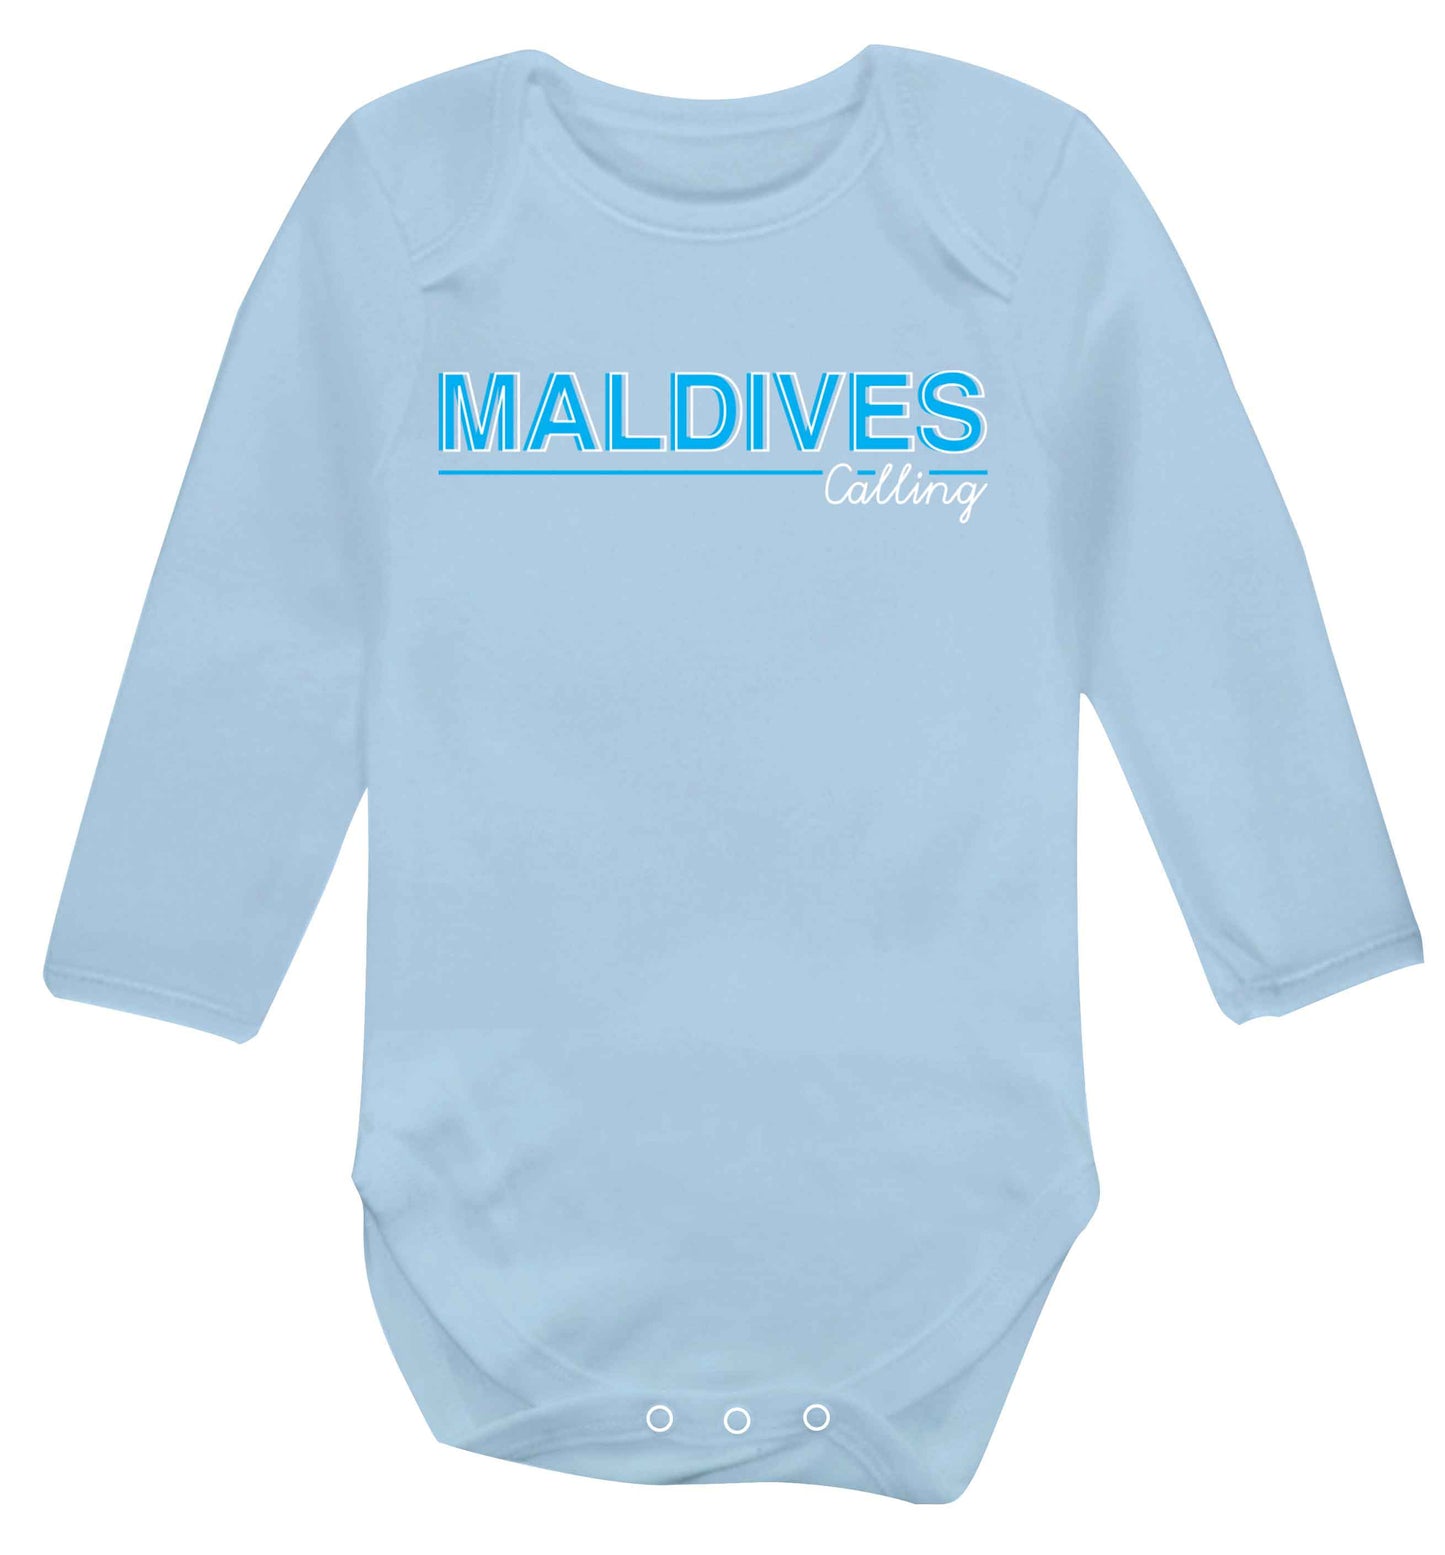 Maldives calling Baby Vest long sleeved pale blue 6-12 months